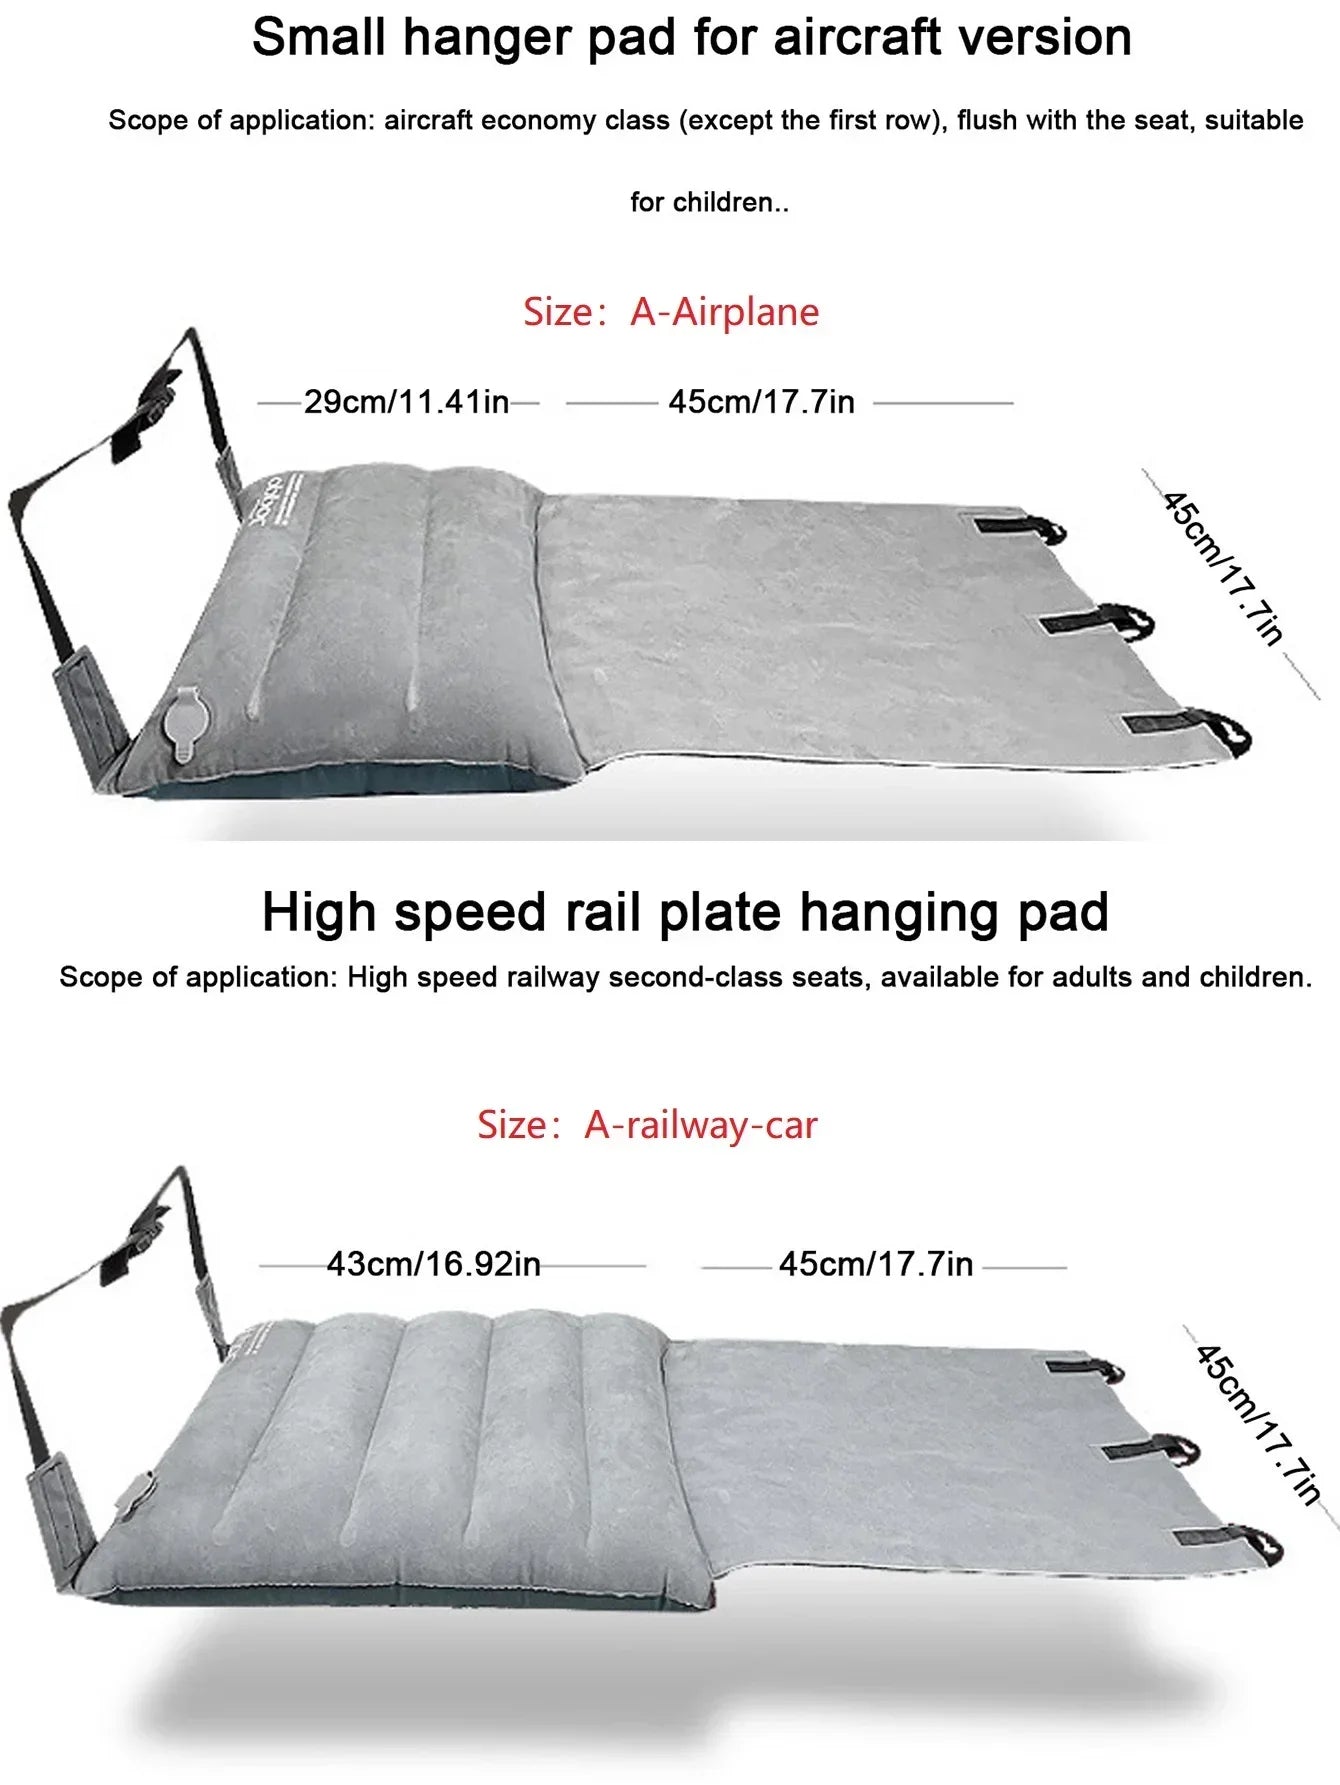 "Portable inflatable footrest hammock" "Adjustable travel car mattress" "Baby airplane footrest"